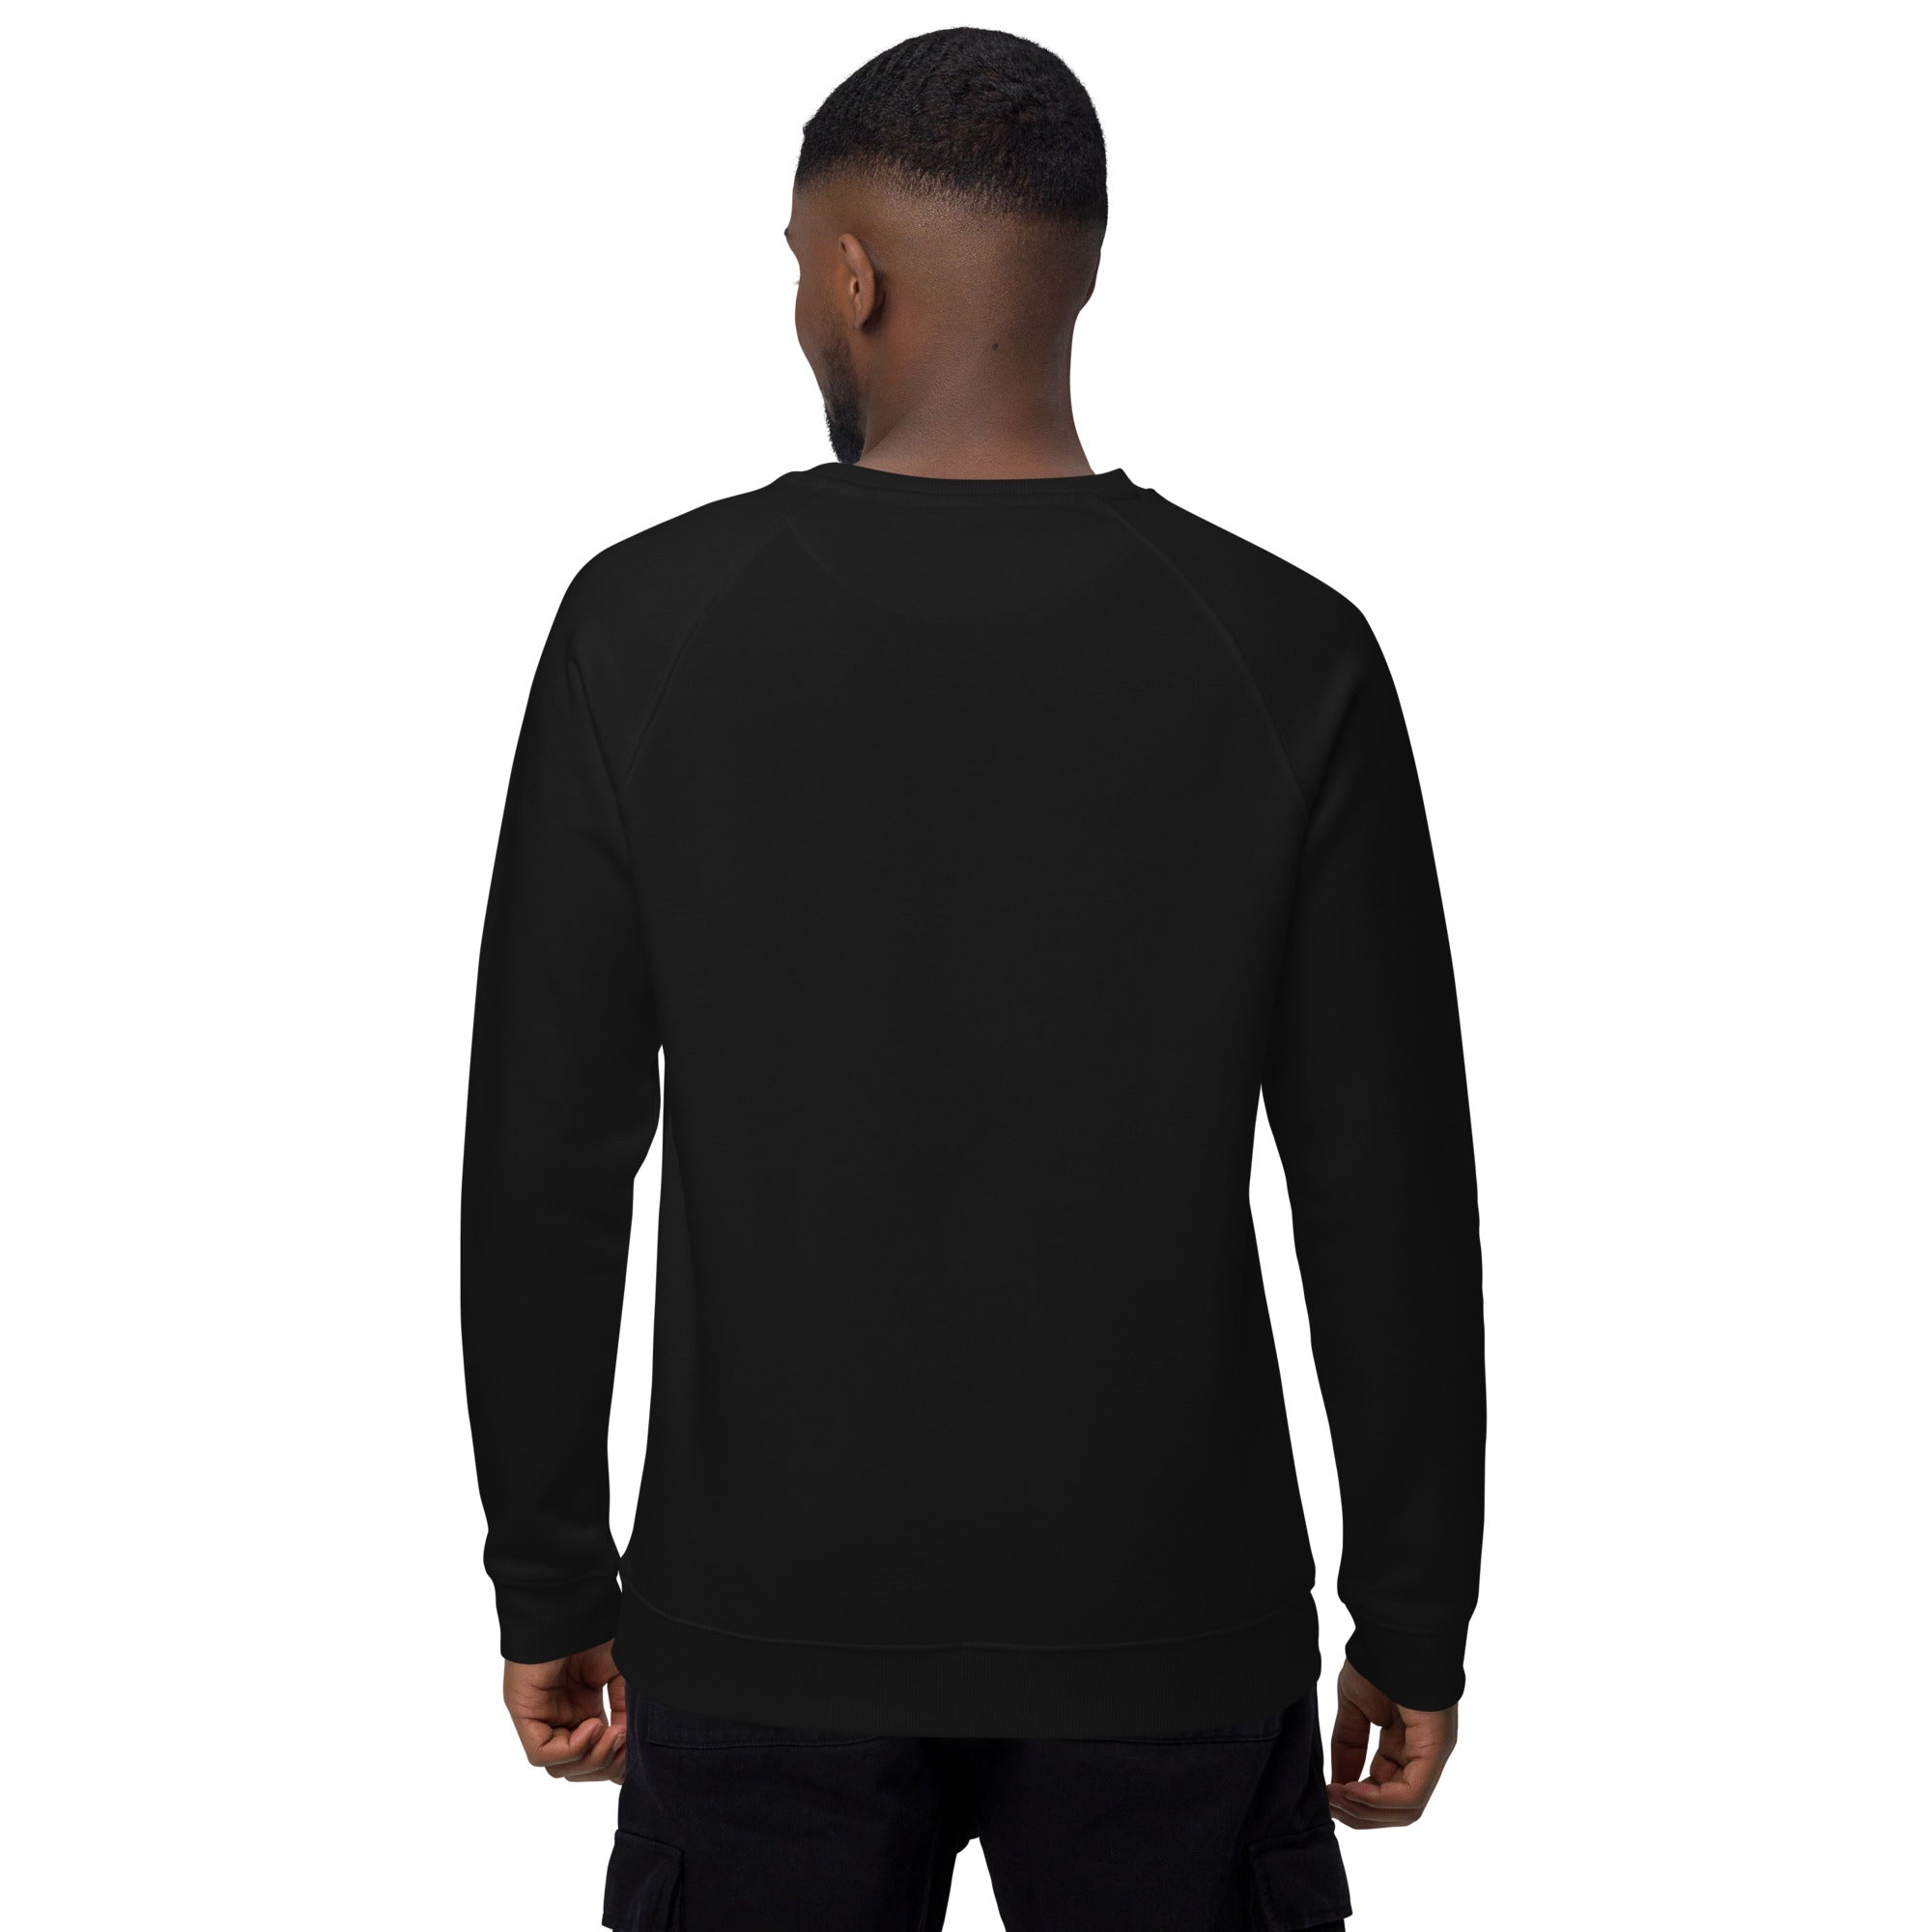 Buford Logo White - Black Unisex organic raglan sweatshirt